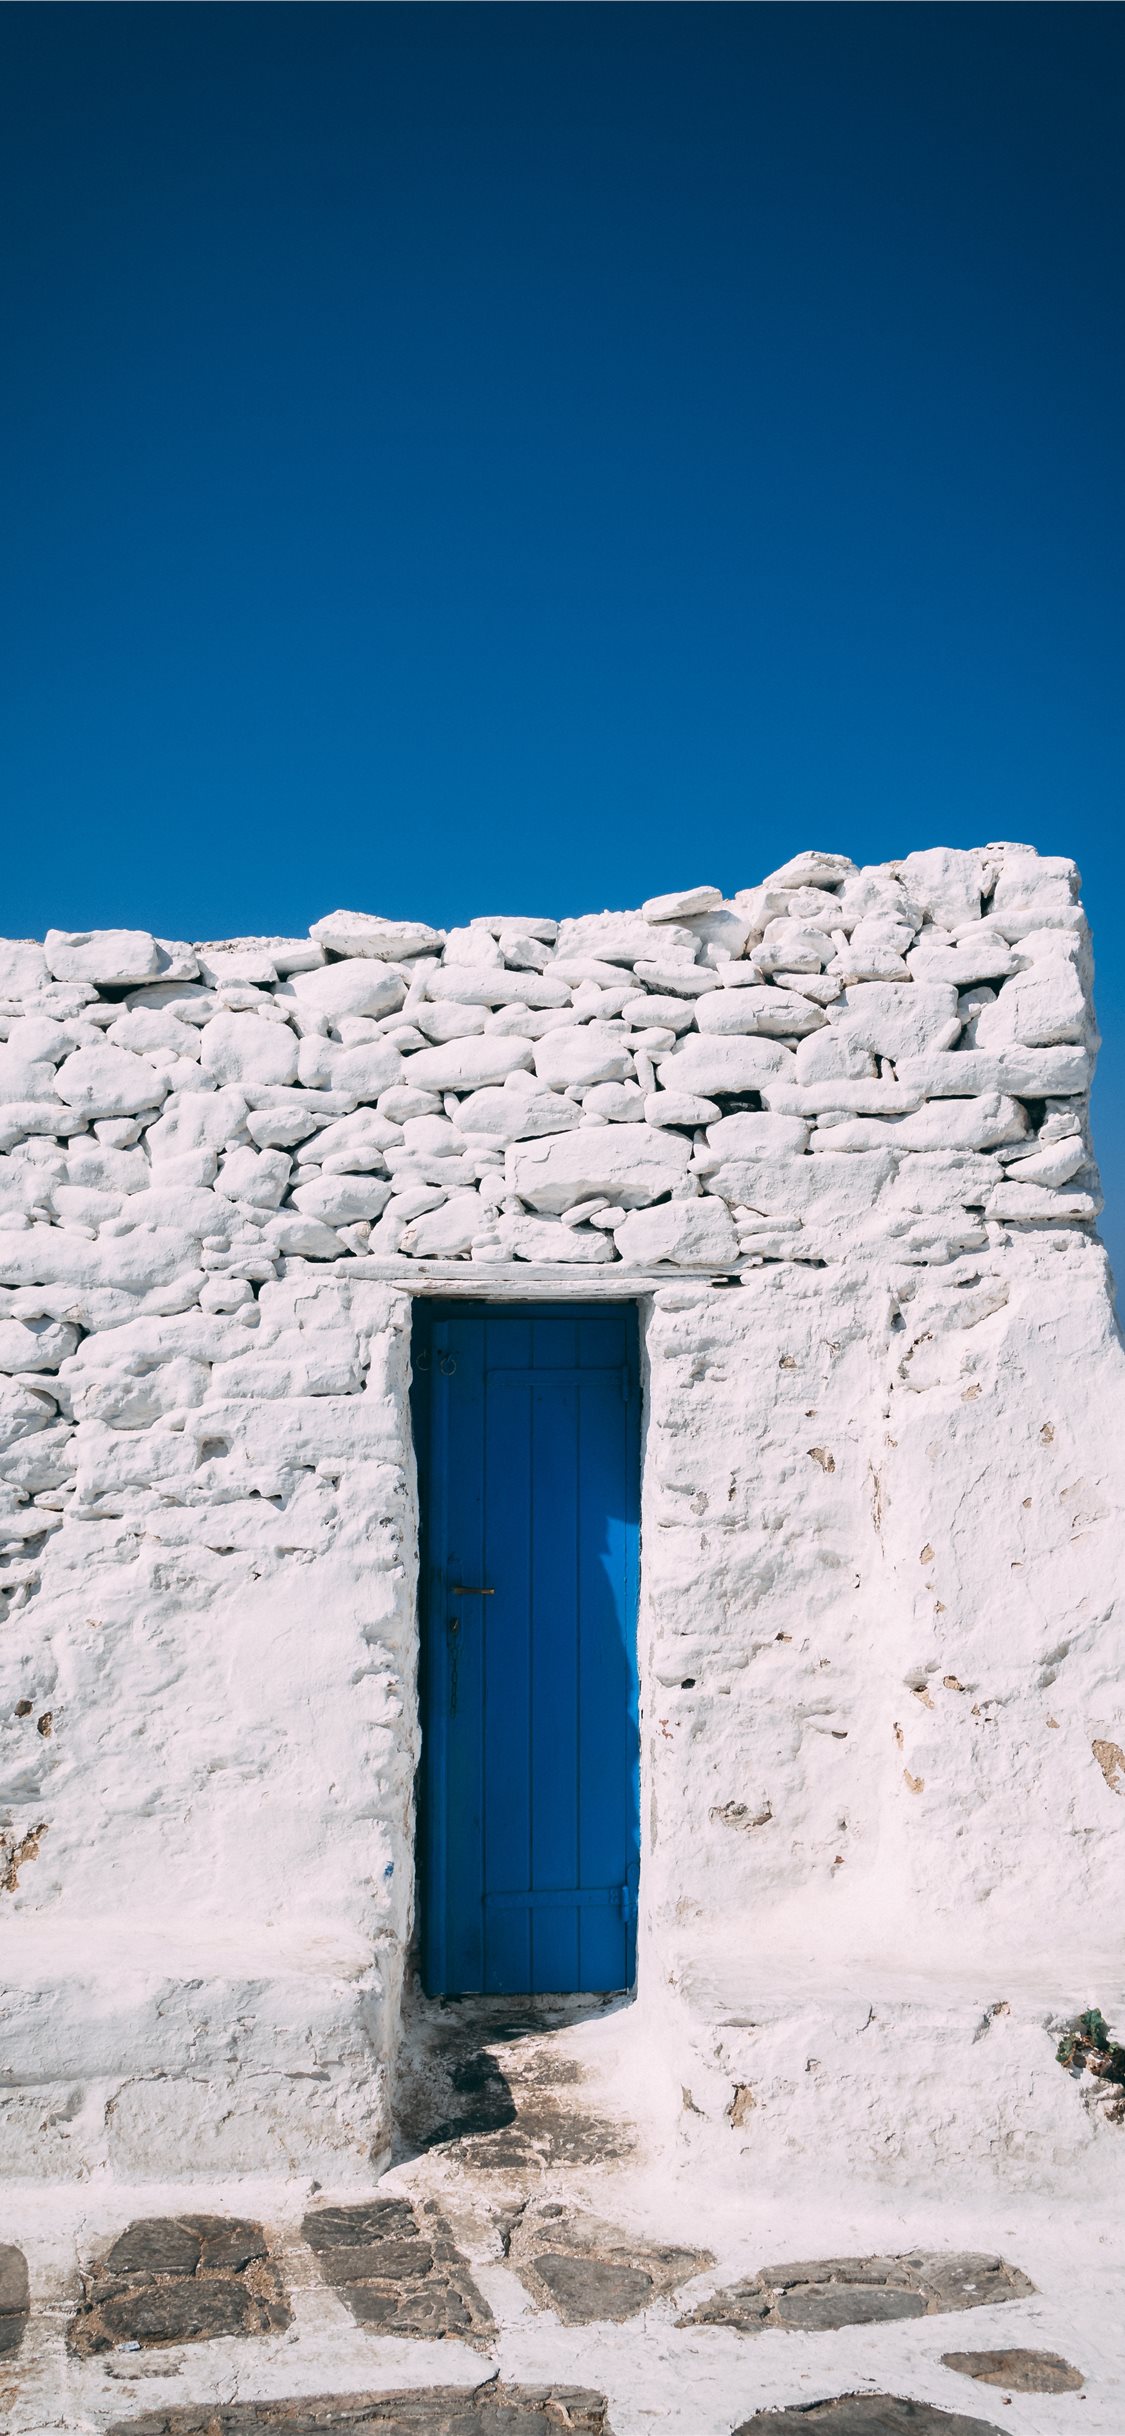 Greece Sea Santorini  Free photo on Pixabay  Pixabay